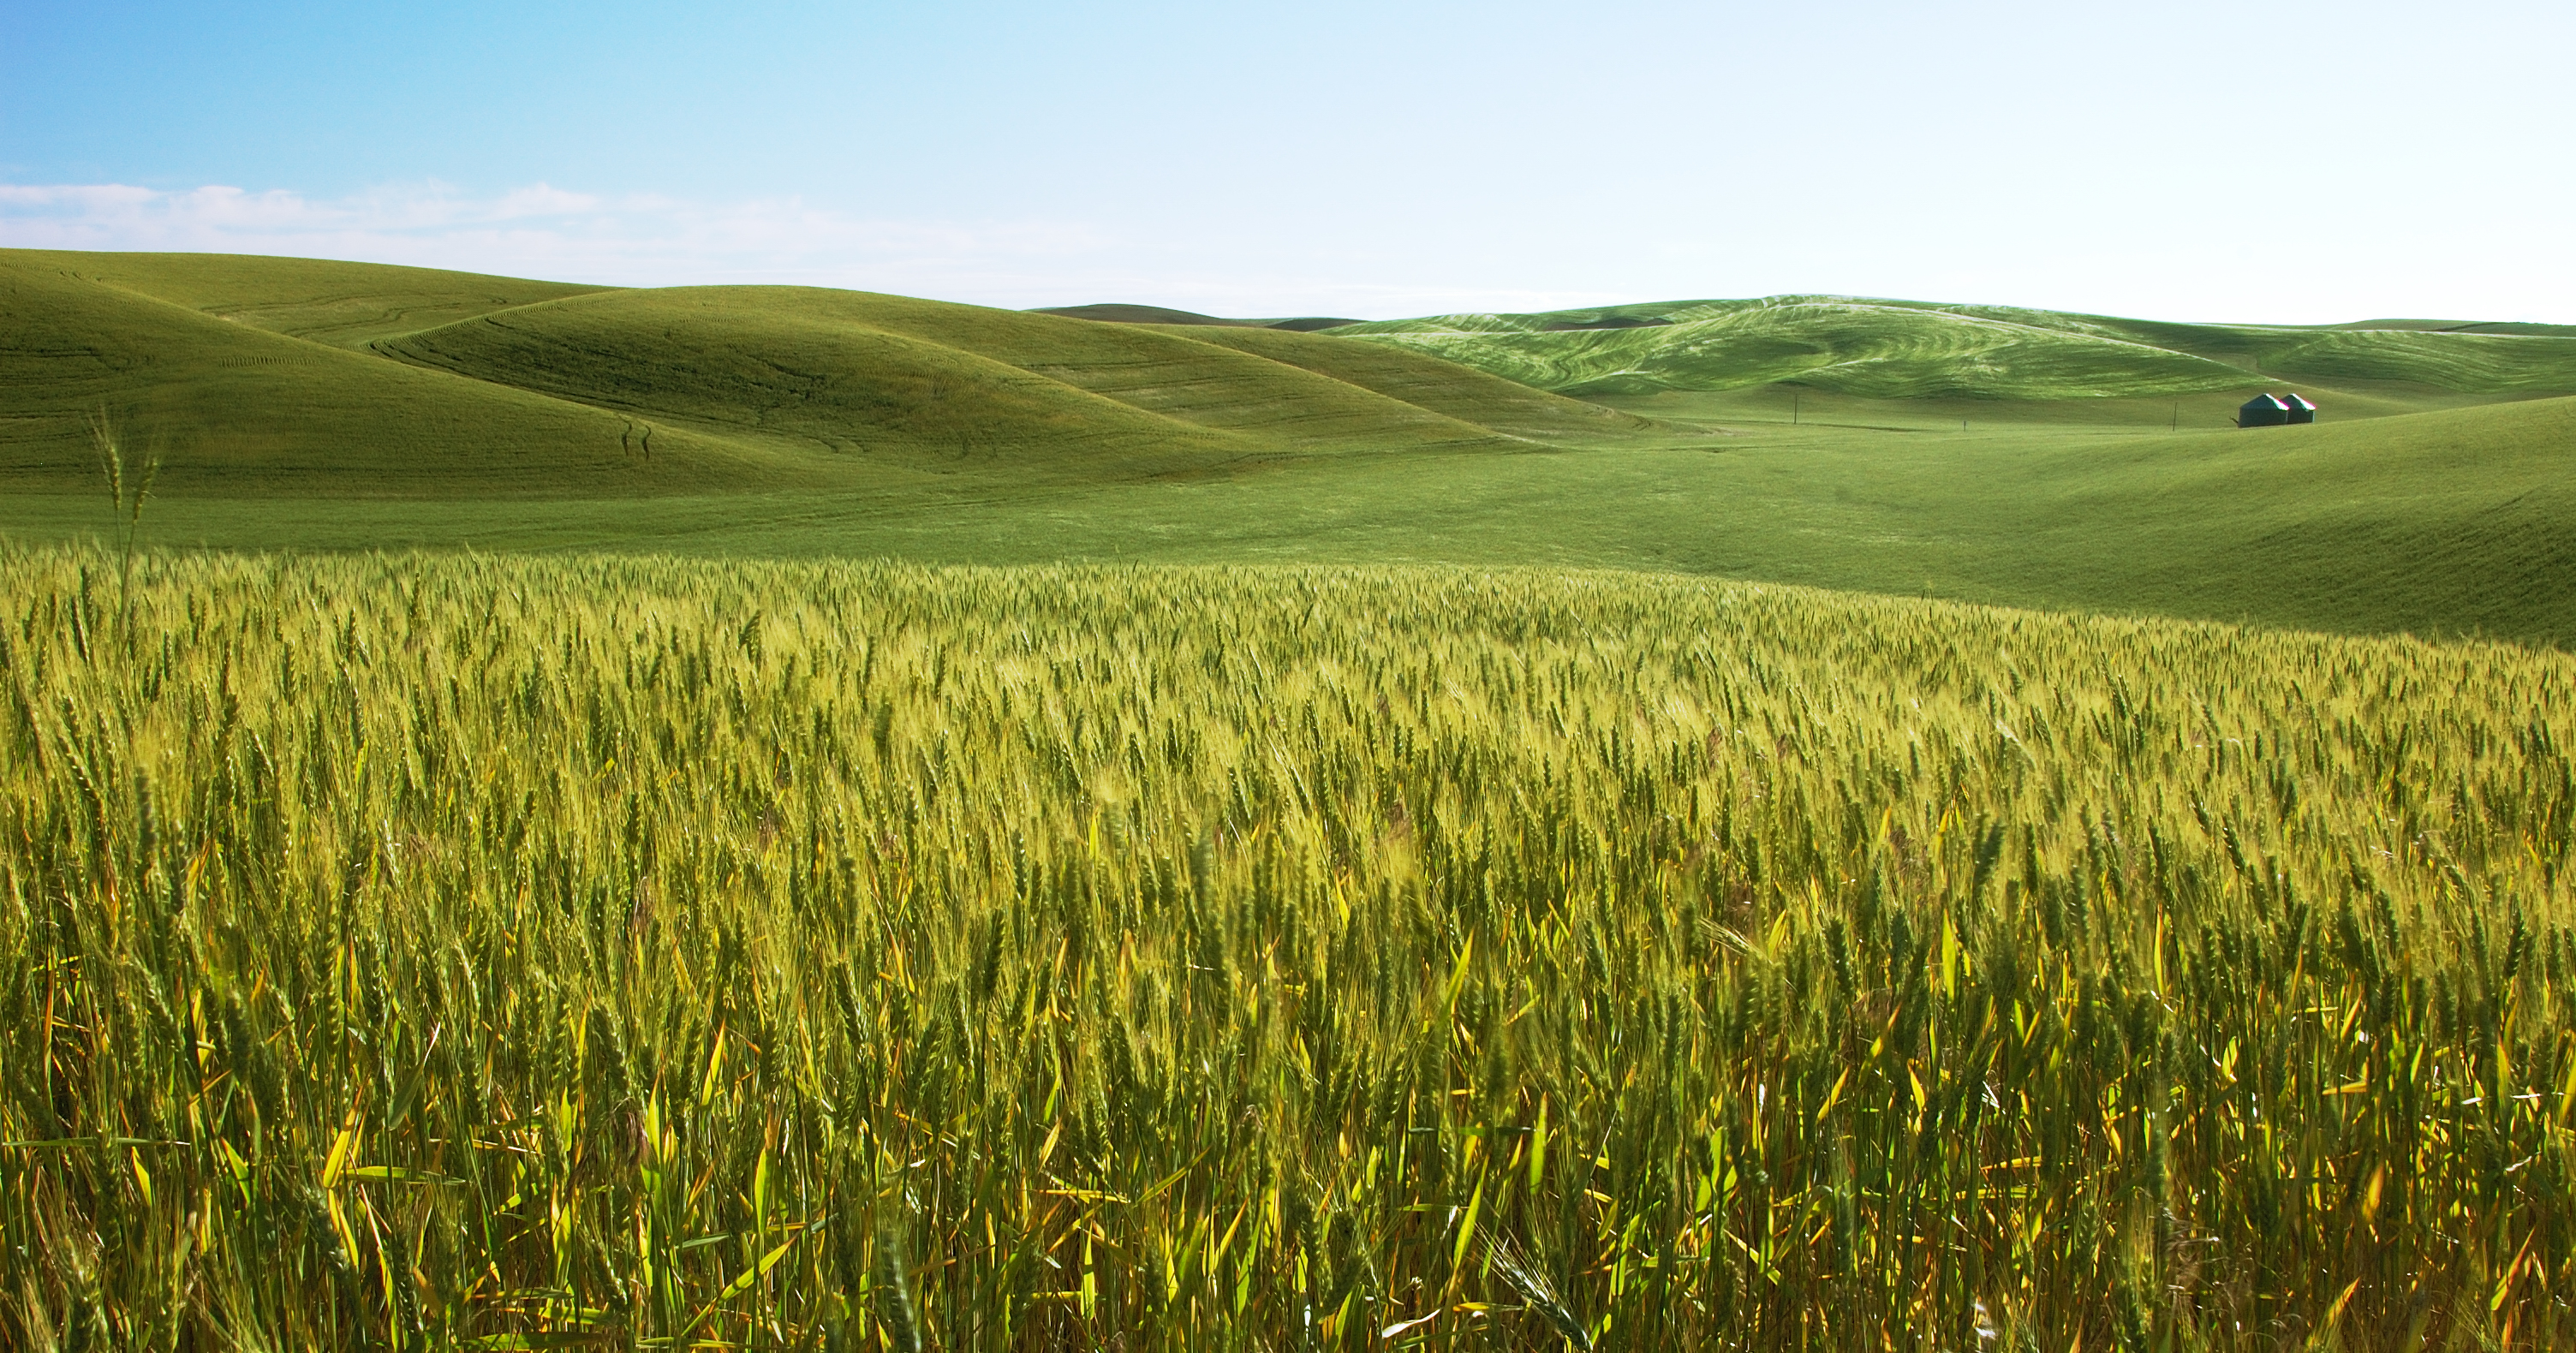 File:Barley field-2007-02-22(large).jpg - Wikimedia Commons